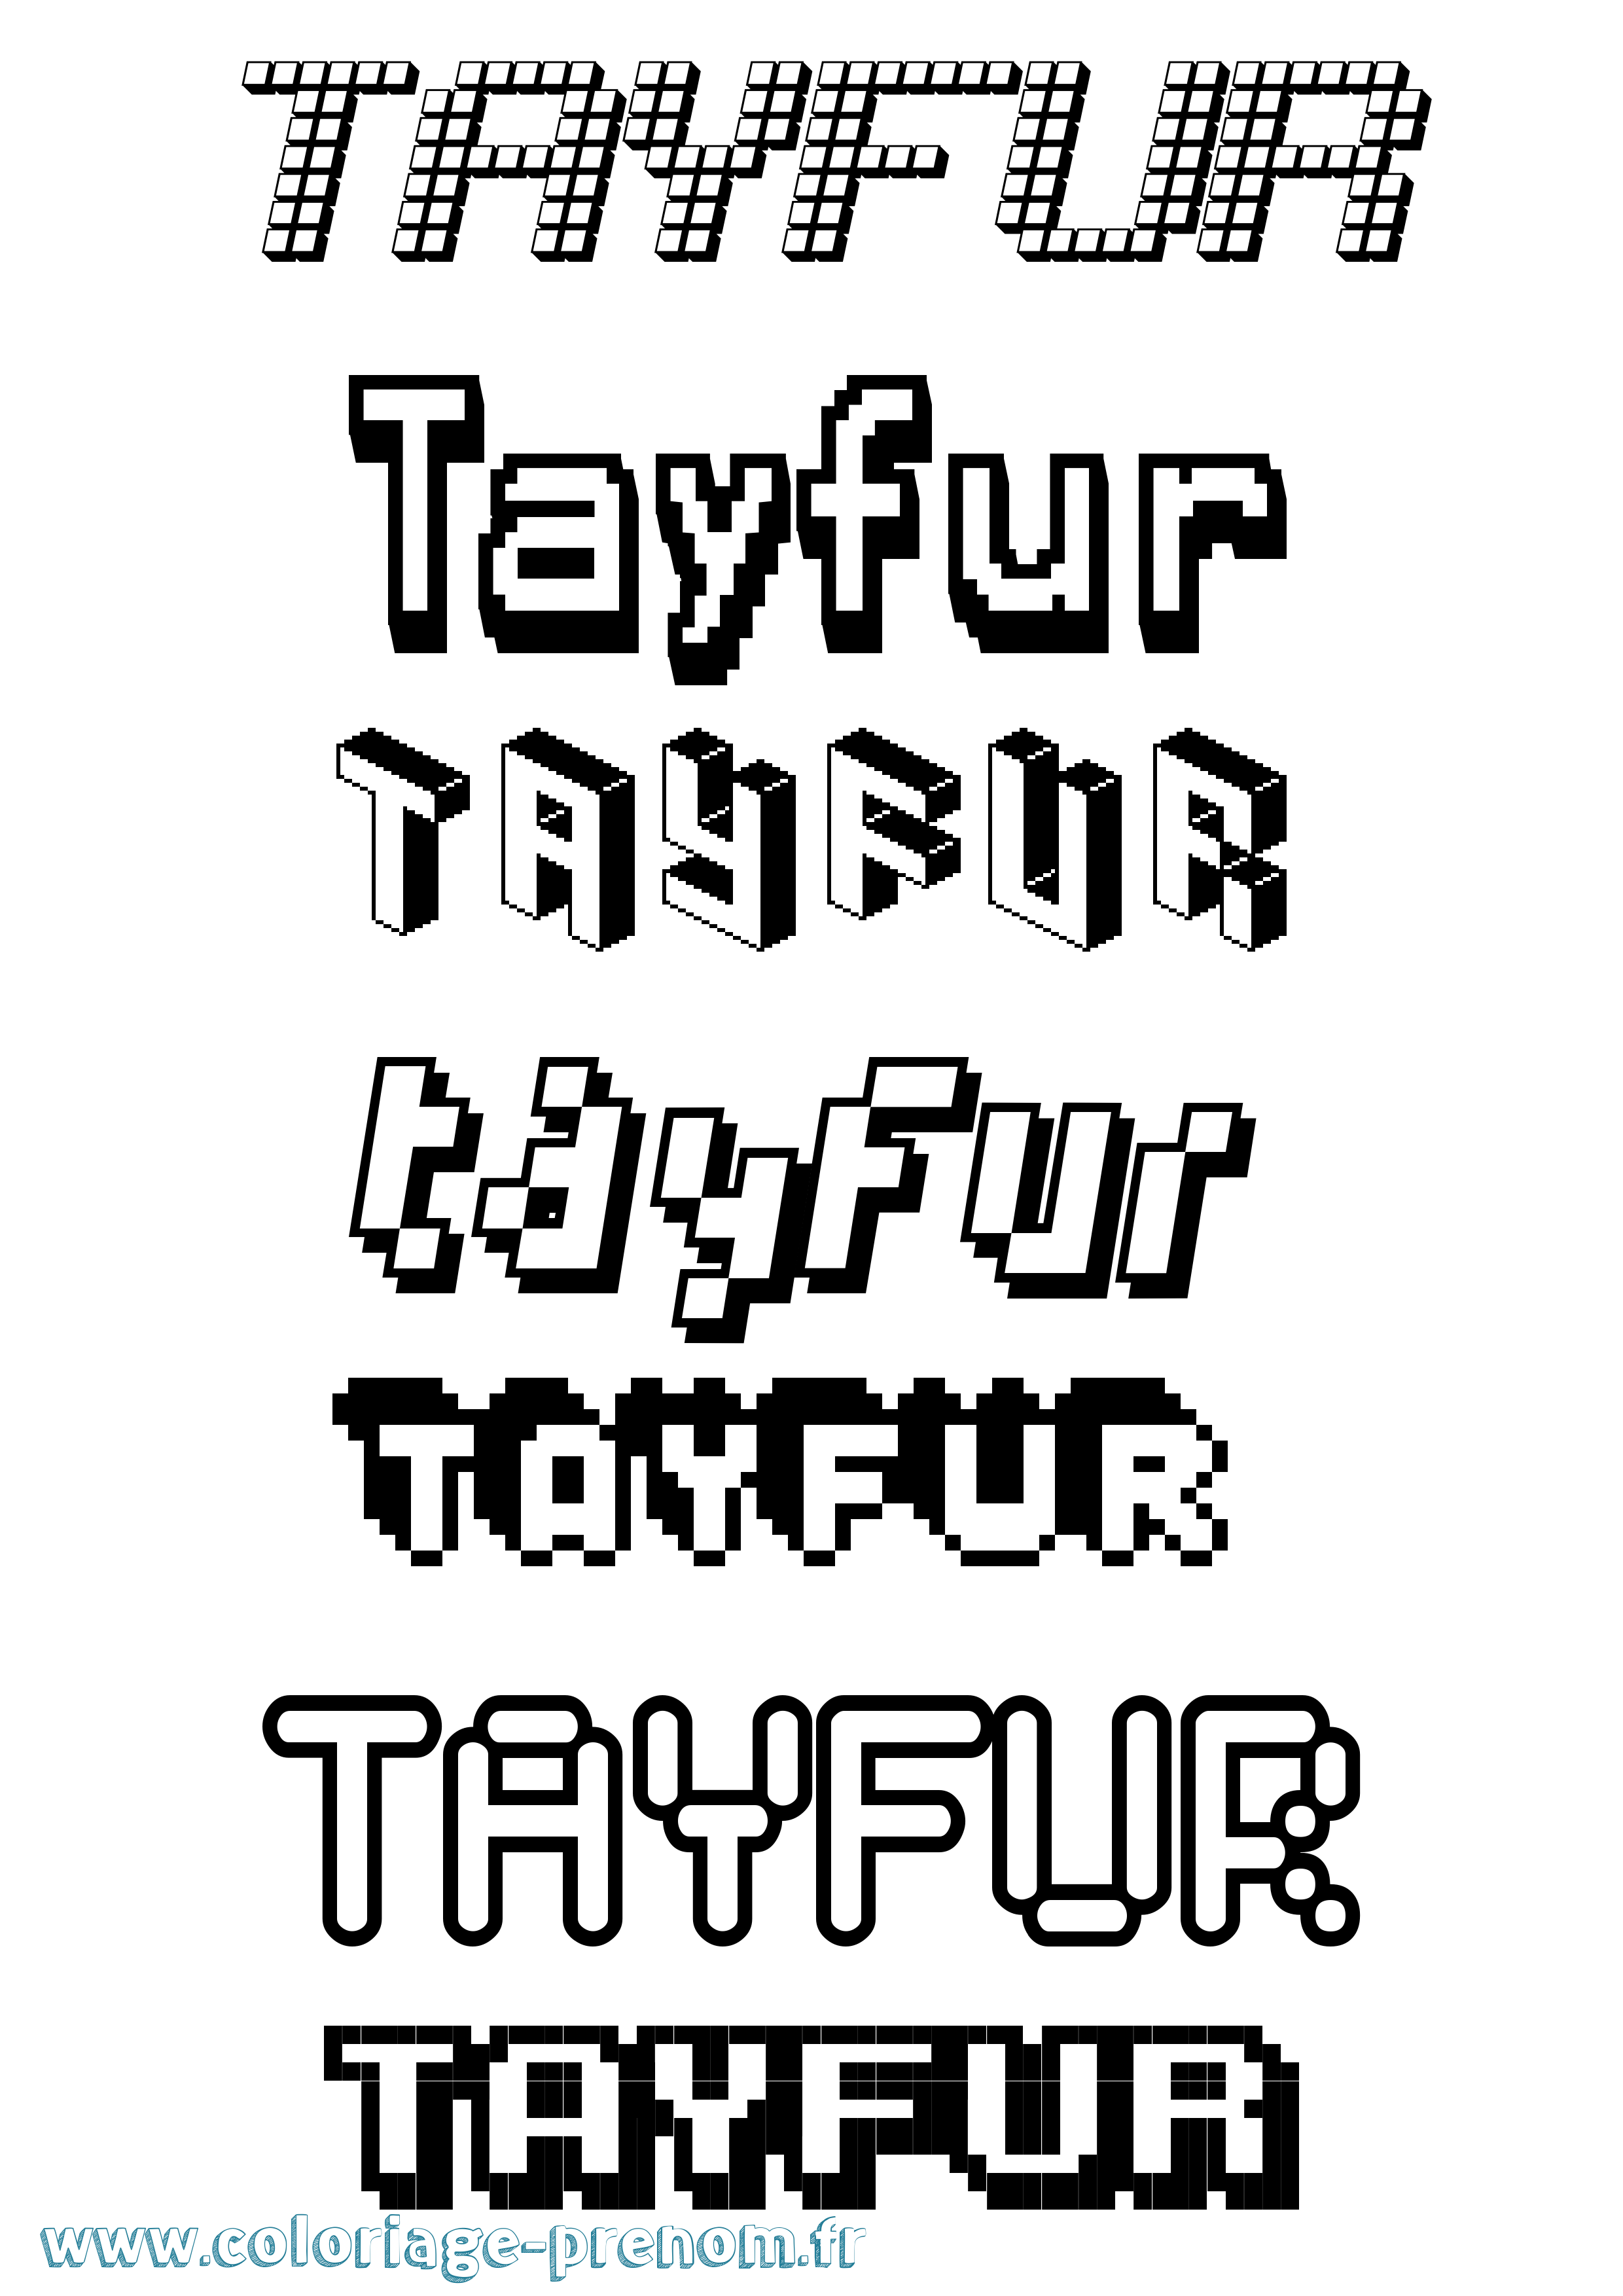 Coloriage prénom Tayfur Pixel